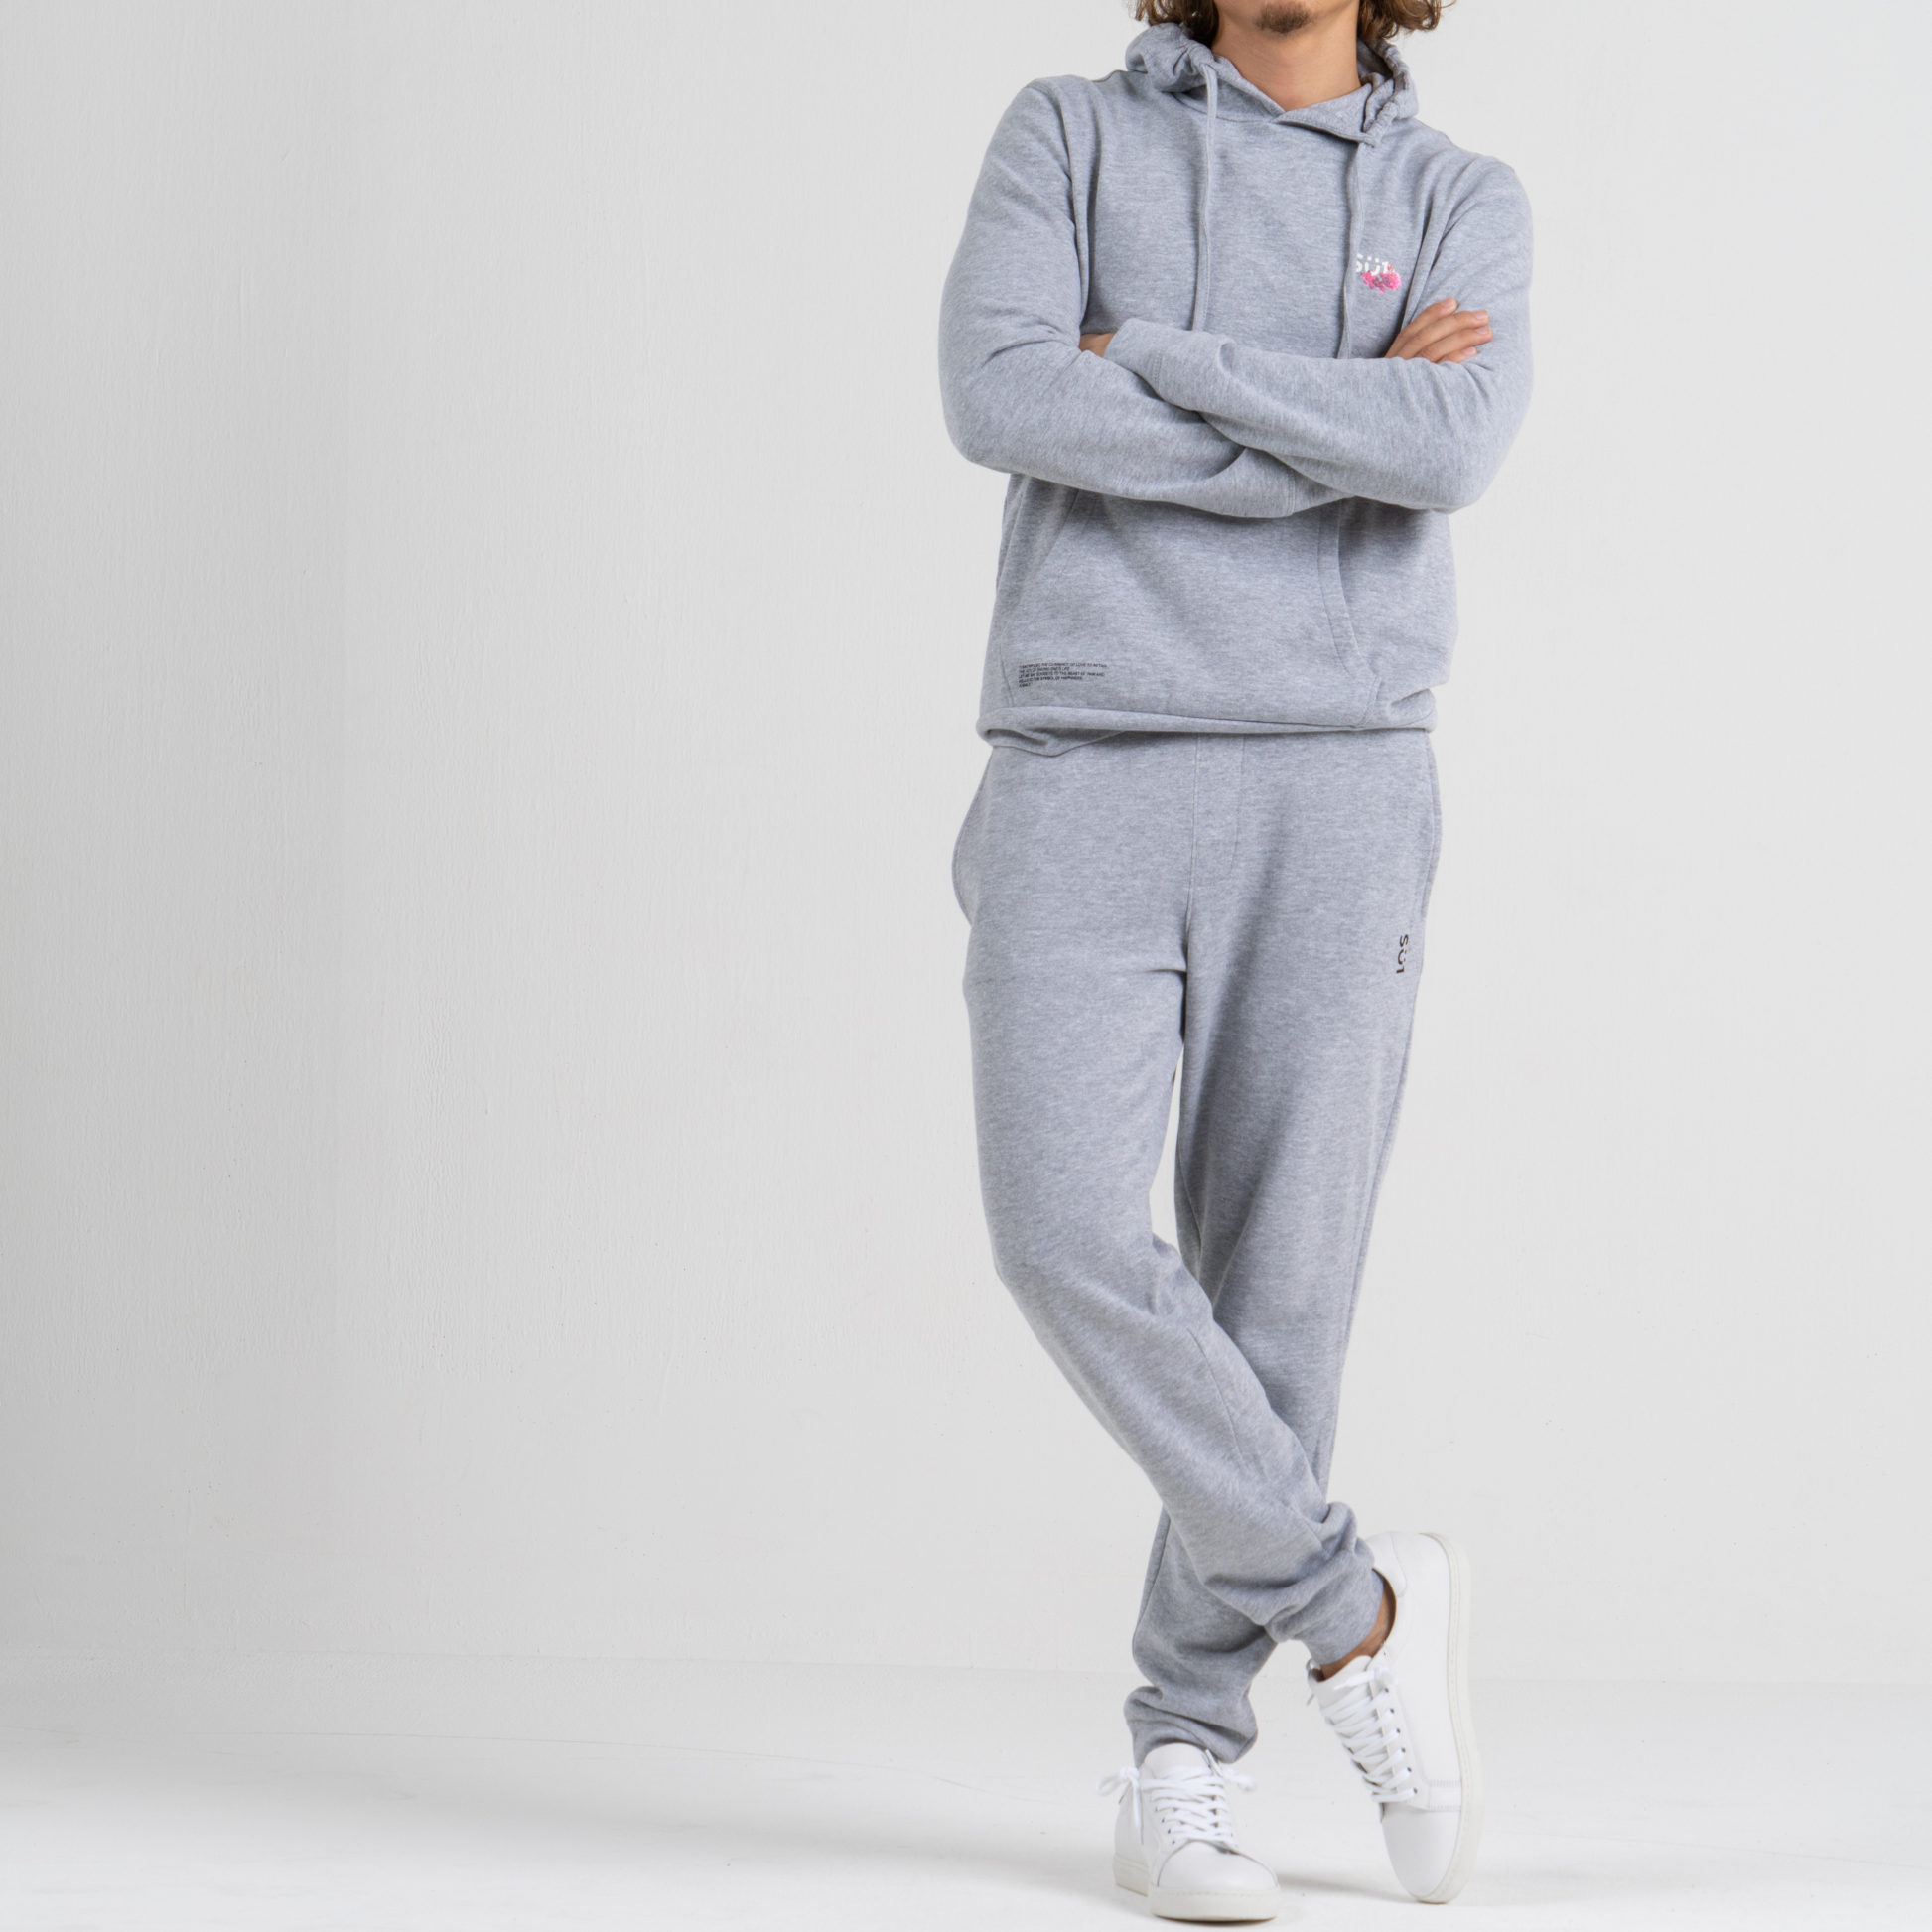 Man wearing grey sport trousers SU1 clothing brand